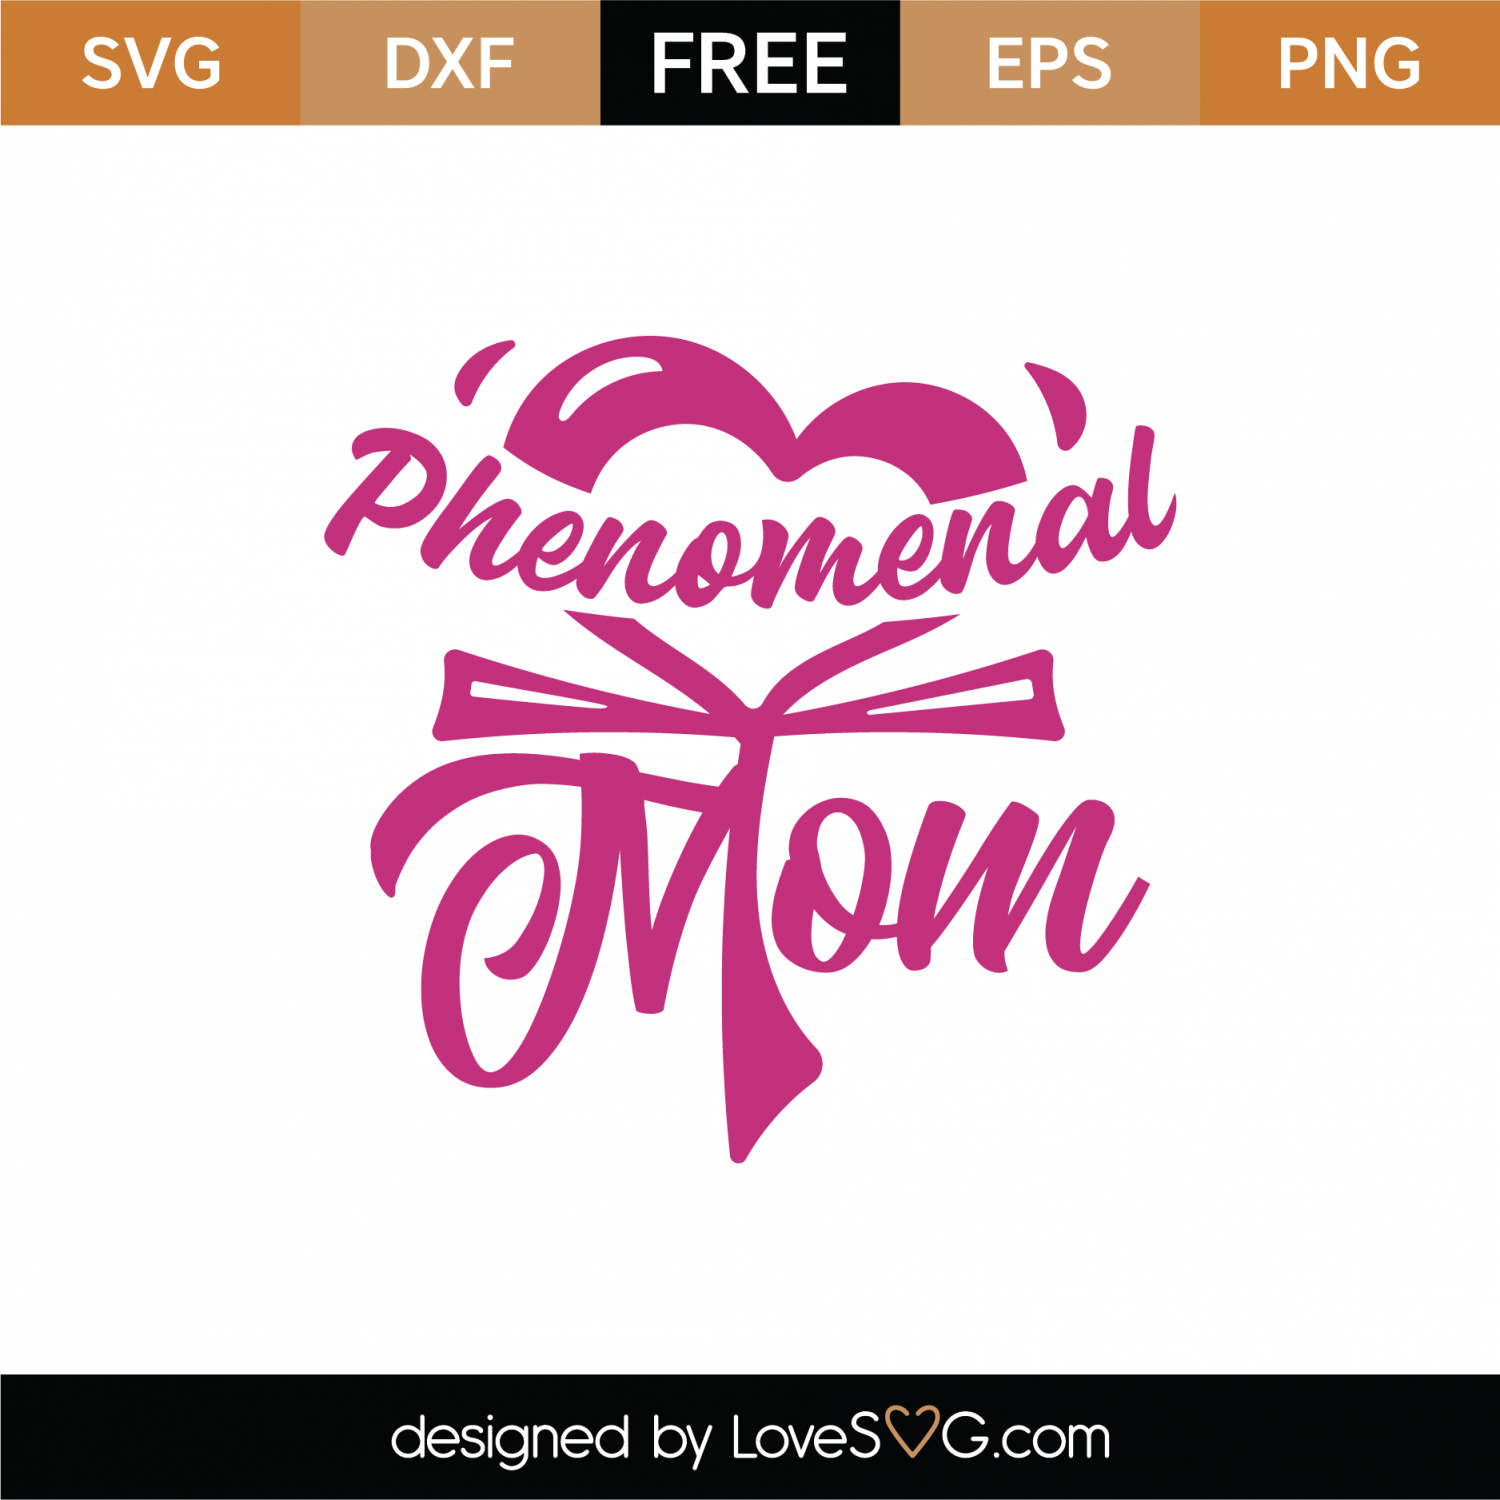 Download Free Phenomenal Mom SVG Cut File | Lovesvg.com